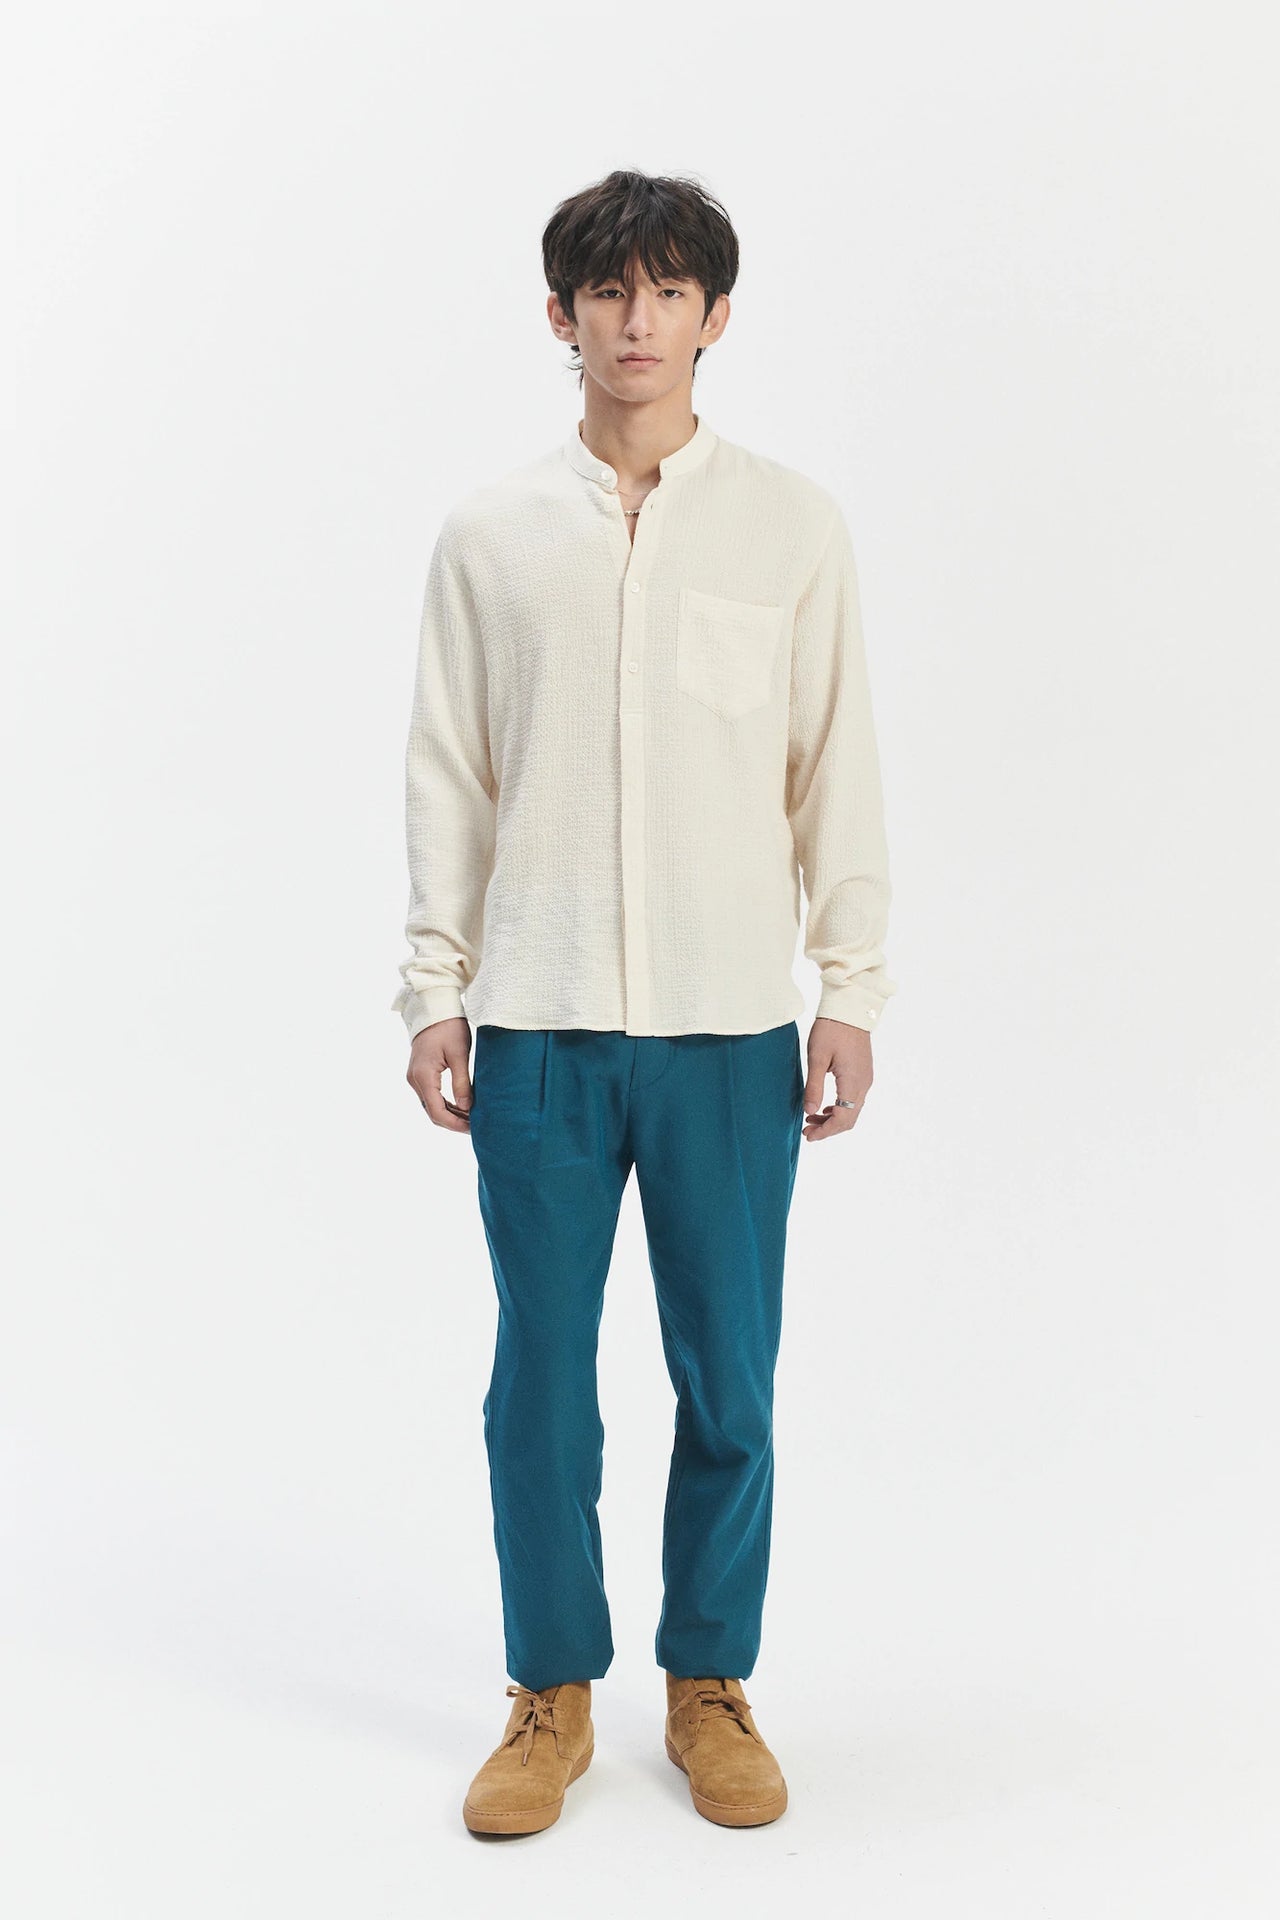 Zen Grandad Collar Shirt in the Finest Portuguese Cashmere and Cotton Creamy Seersucker